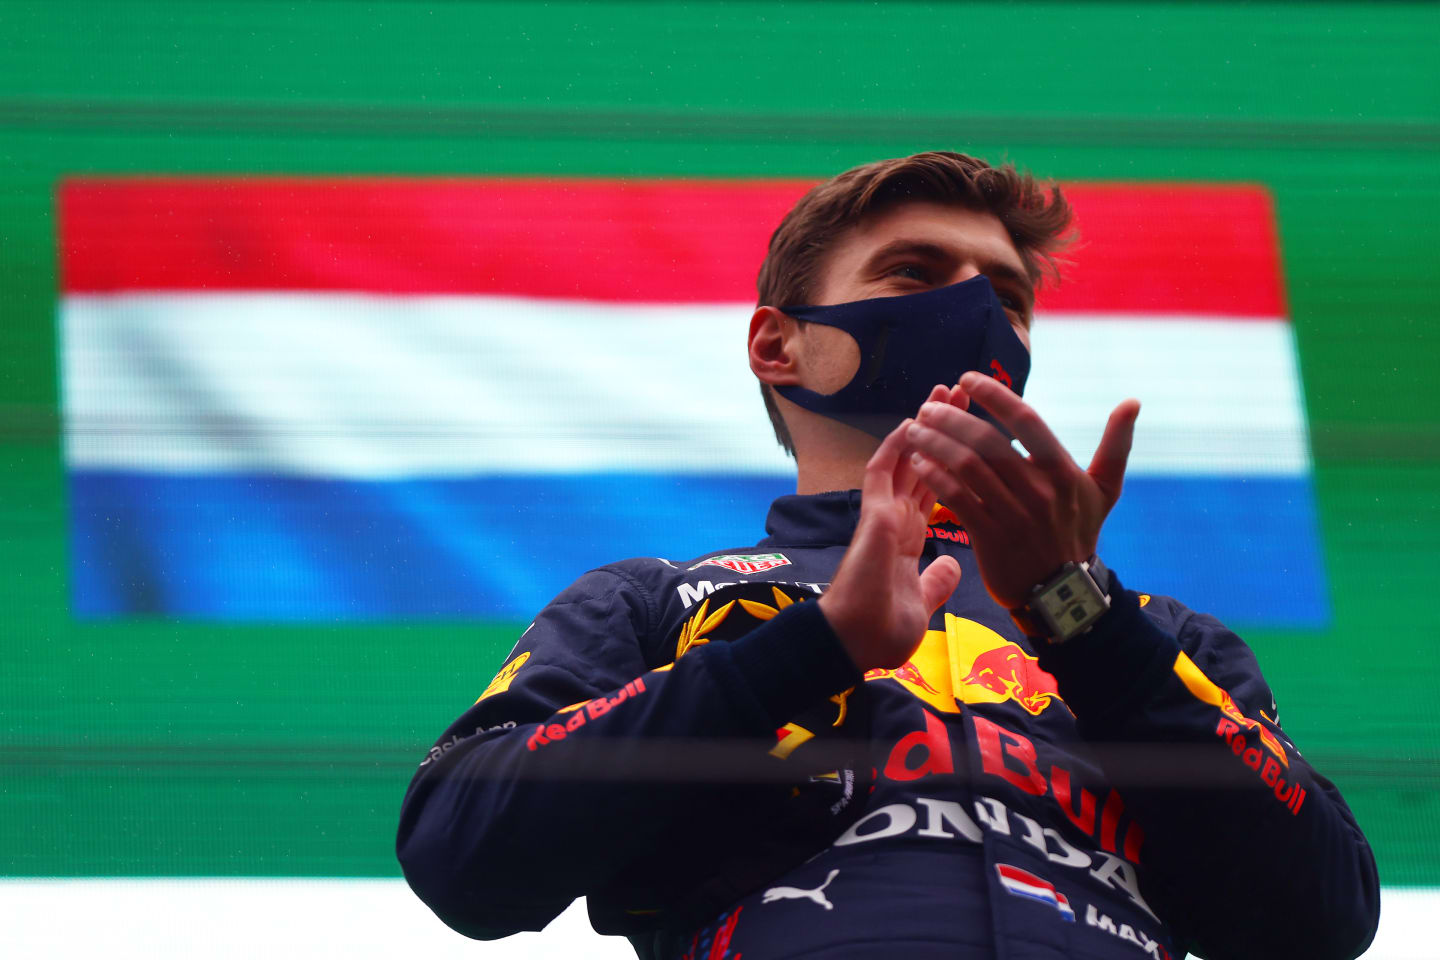 SPA, BELGIUM - AUGUST 29: Race winner Max Verstappen of Netherlands and Red Bull Racing celebrates